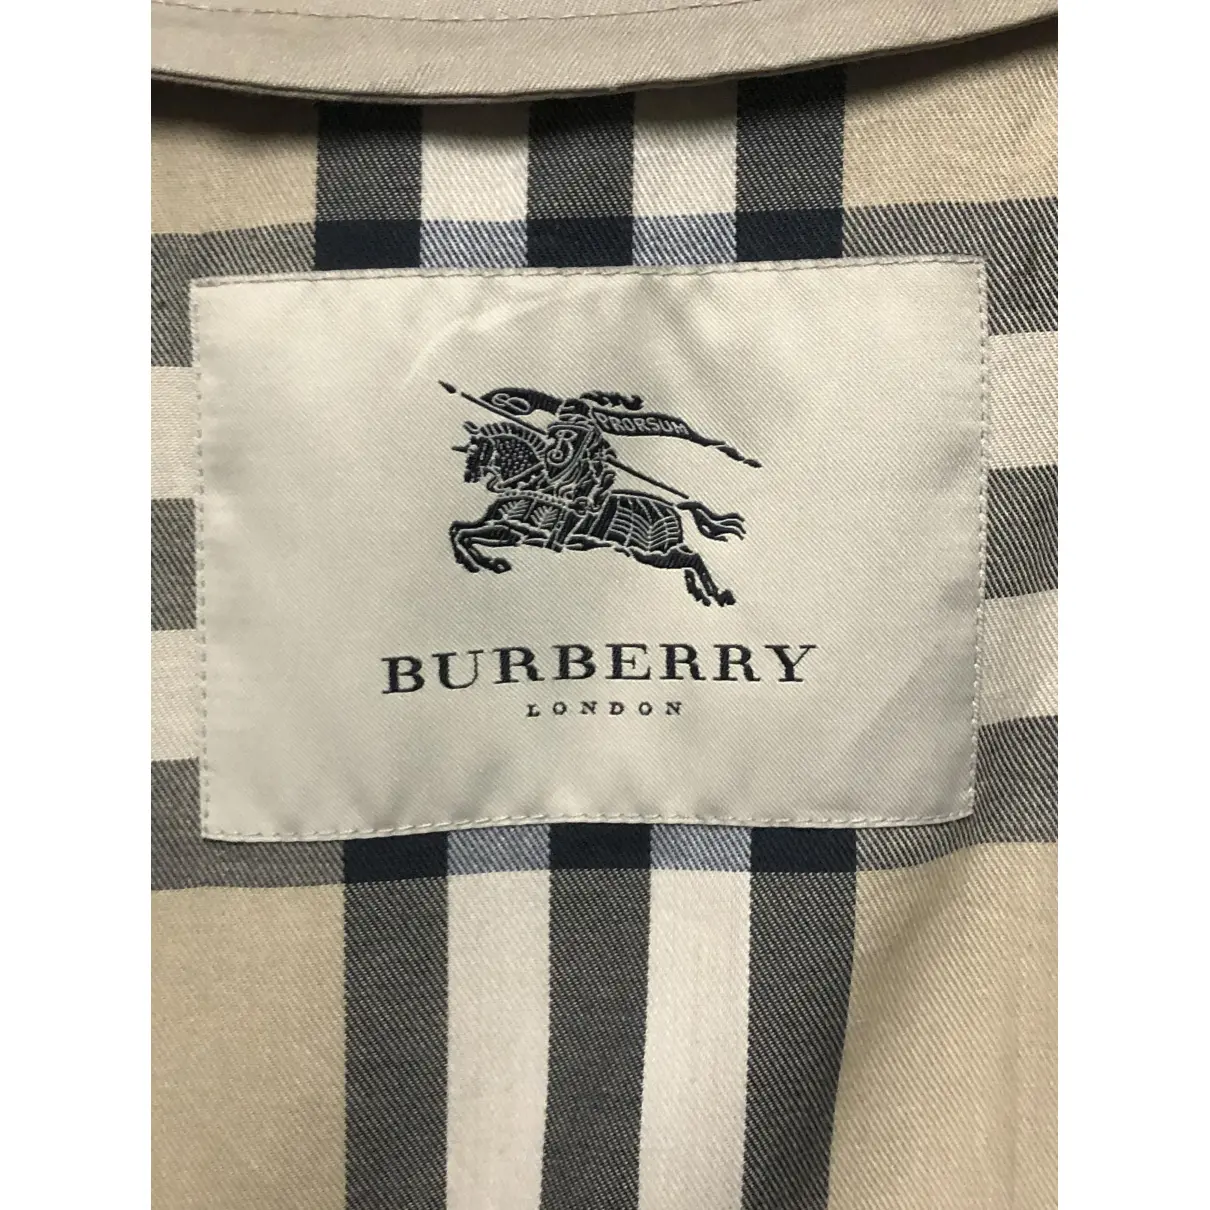 Trenchcoat Burberry - Vintage